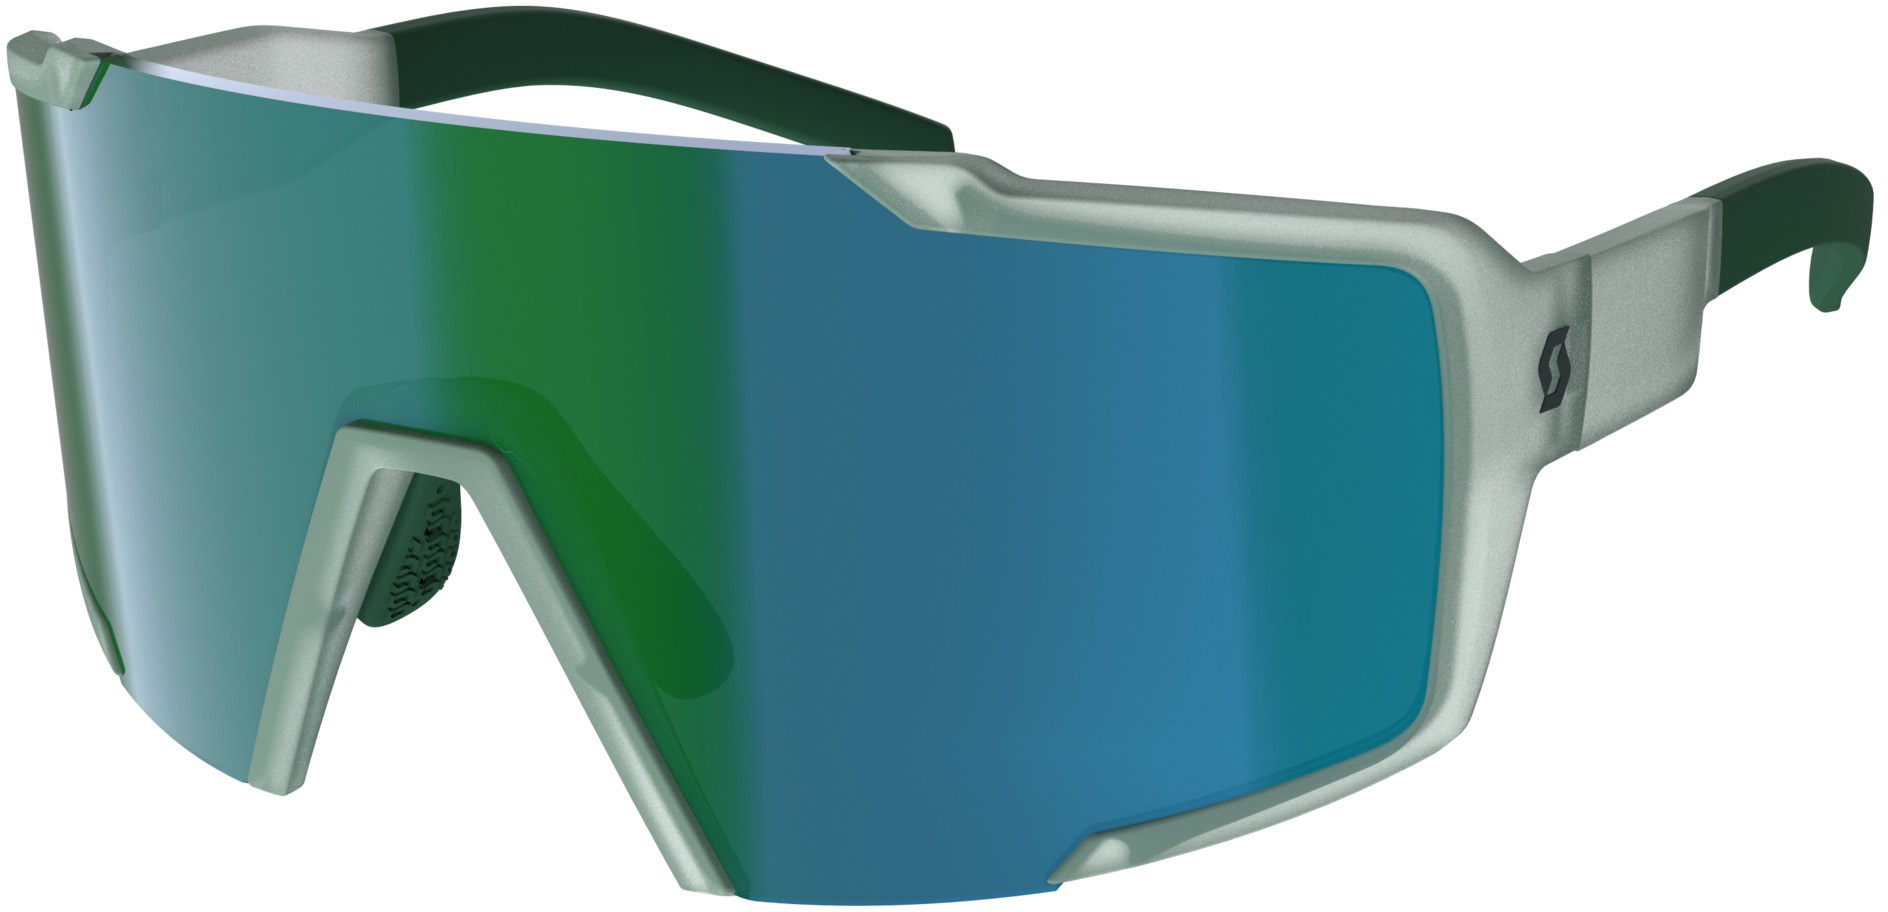 Beklædning - Cykelbriller - Scott Shield Compact Cykelbrille - Grøn/Blå